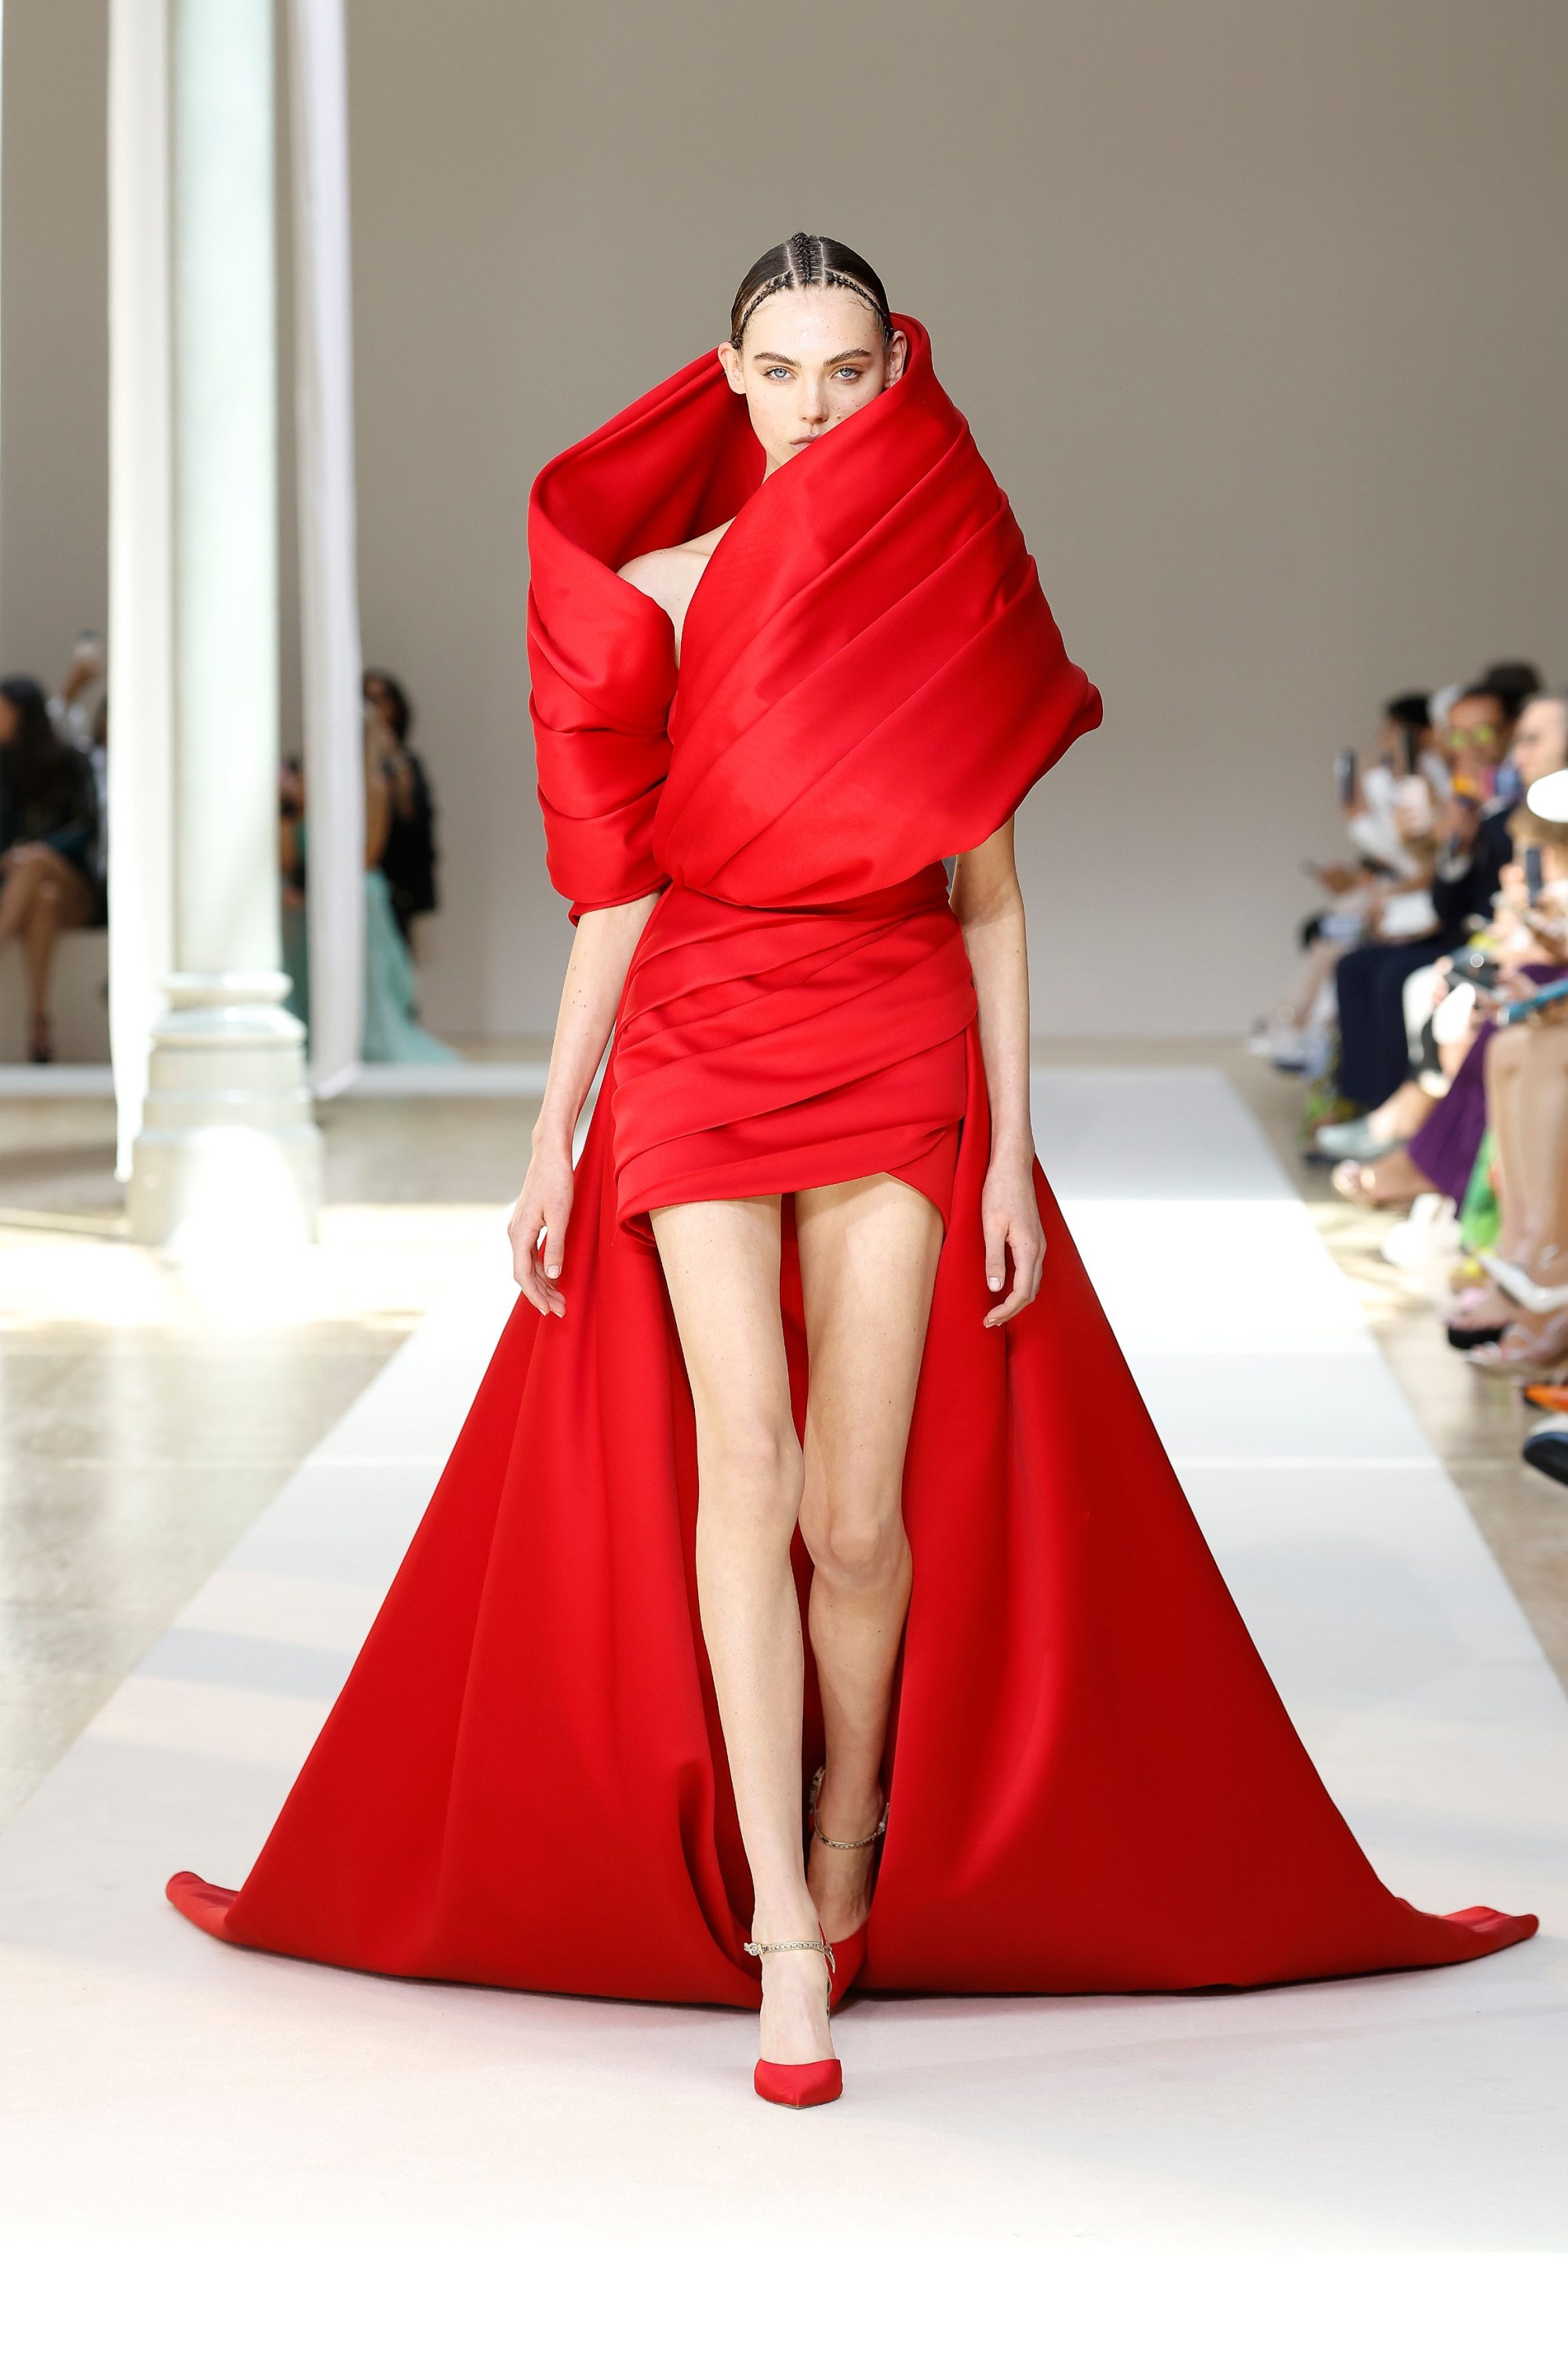 Paris, France, Luxury Designer Dresses on Display, inside Fashion